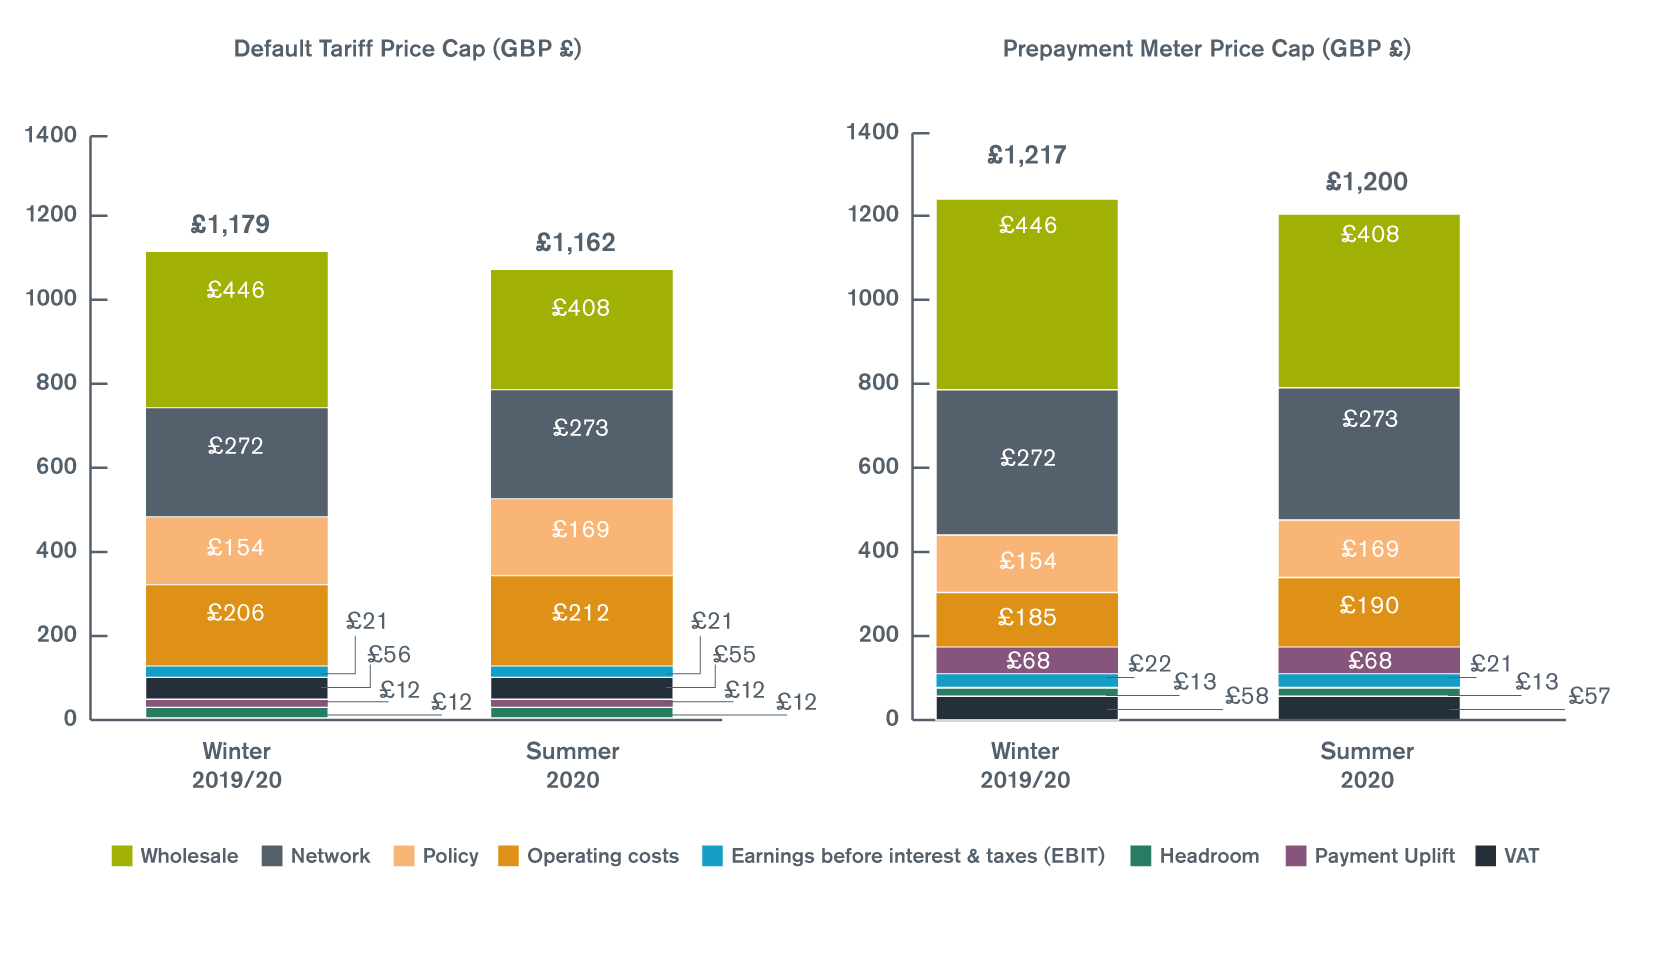 Graphs detailing the Default Tariff Price Cap and the Prepayment Meter Price Cap